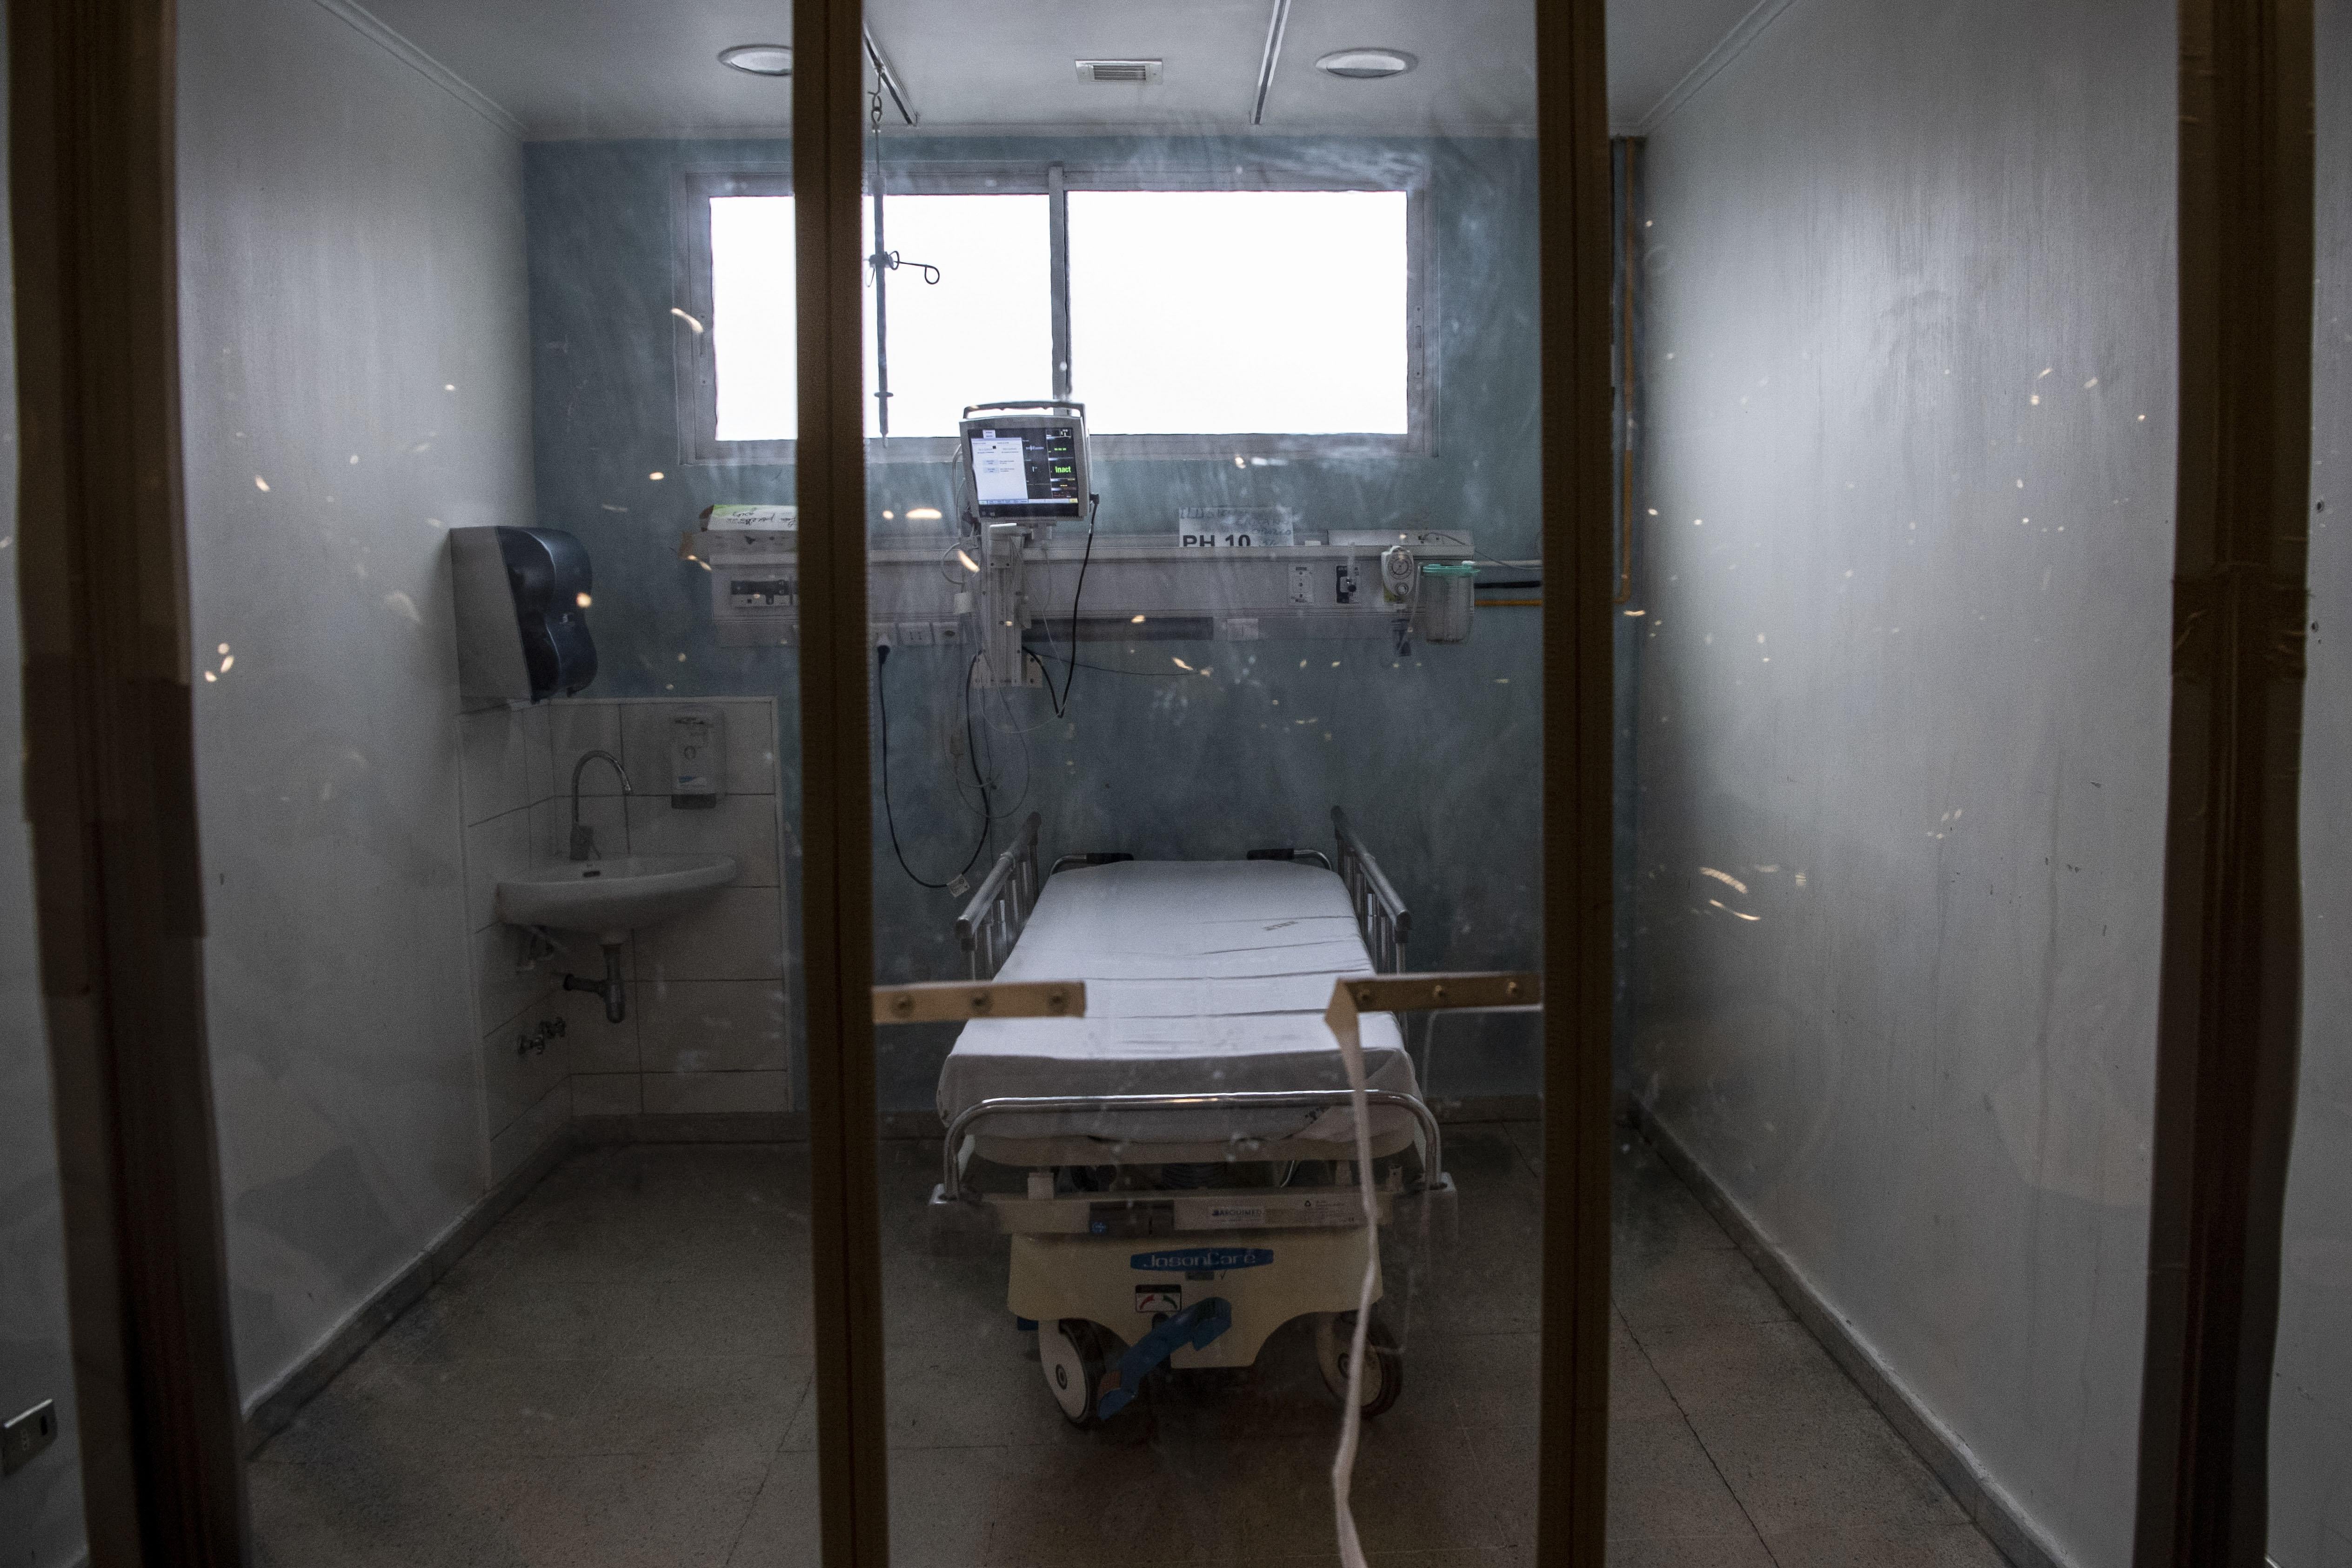 An empty hospital bed is seen through glass frames.